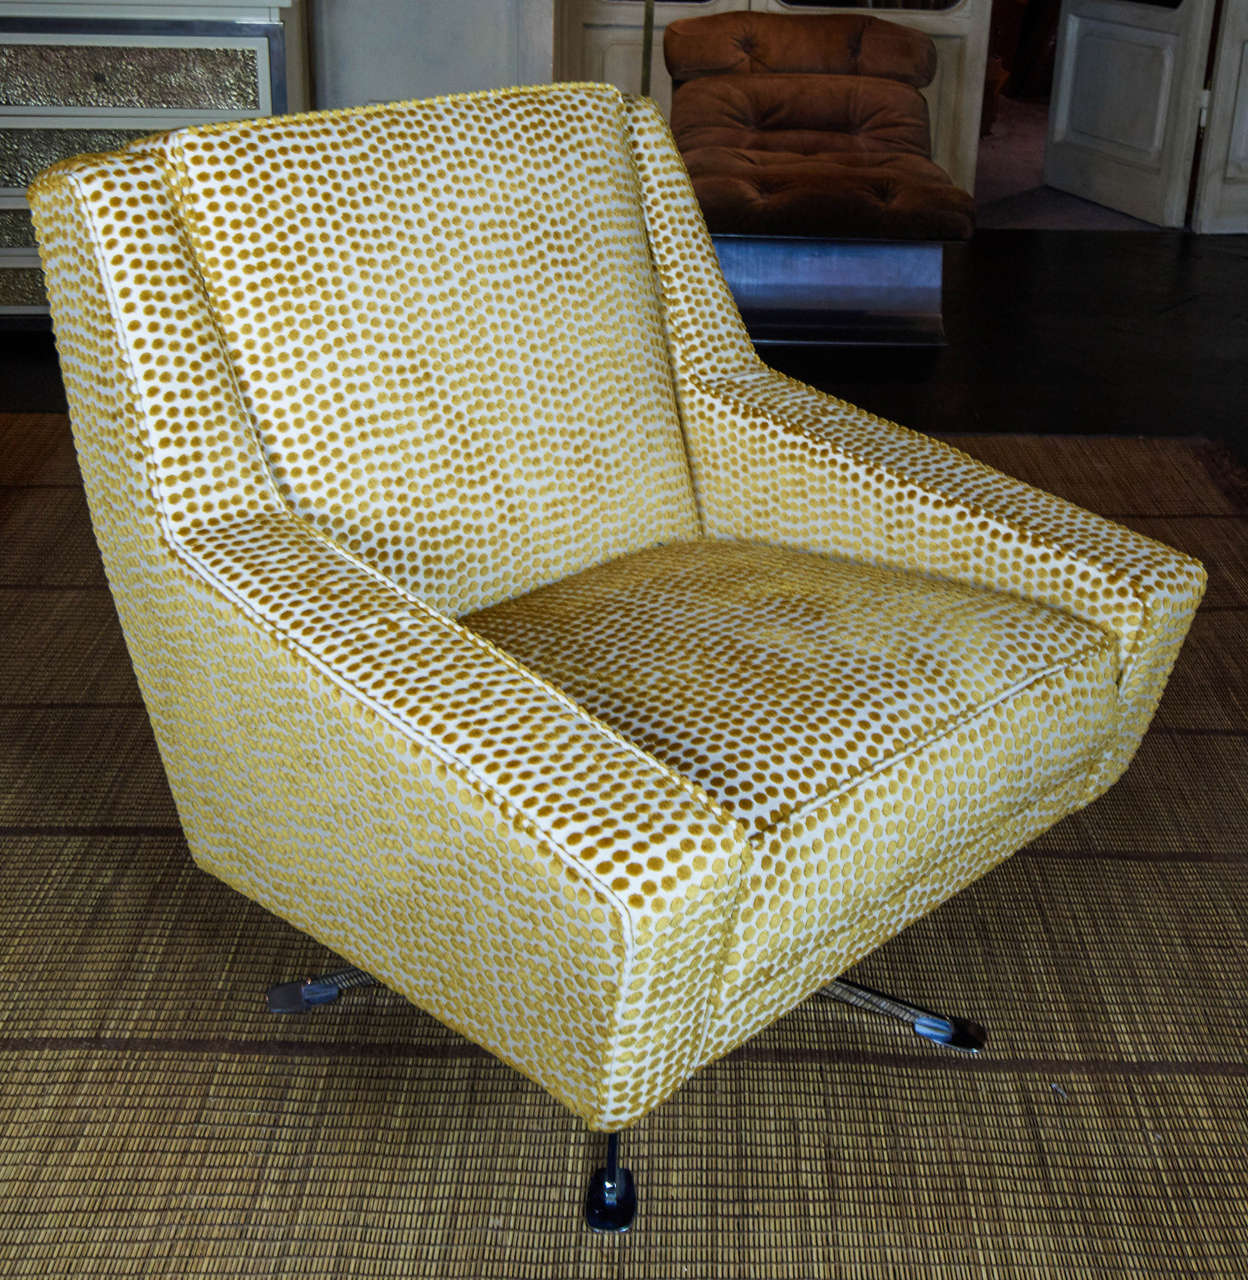 Pair of Italian armchairs, newly reupholstered in yellow dot velvet fabric, chromed base.